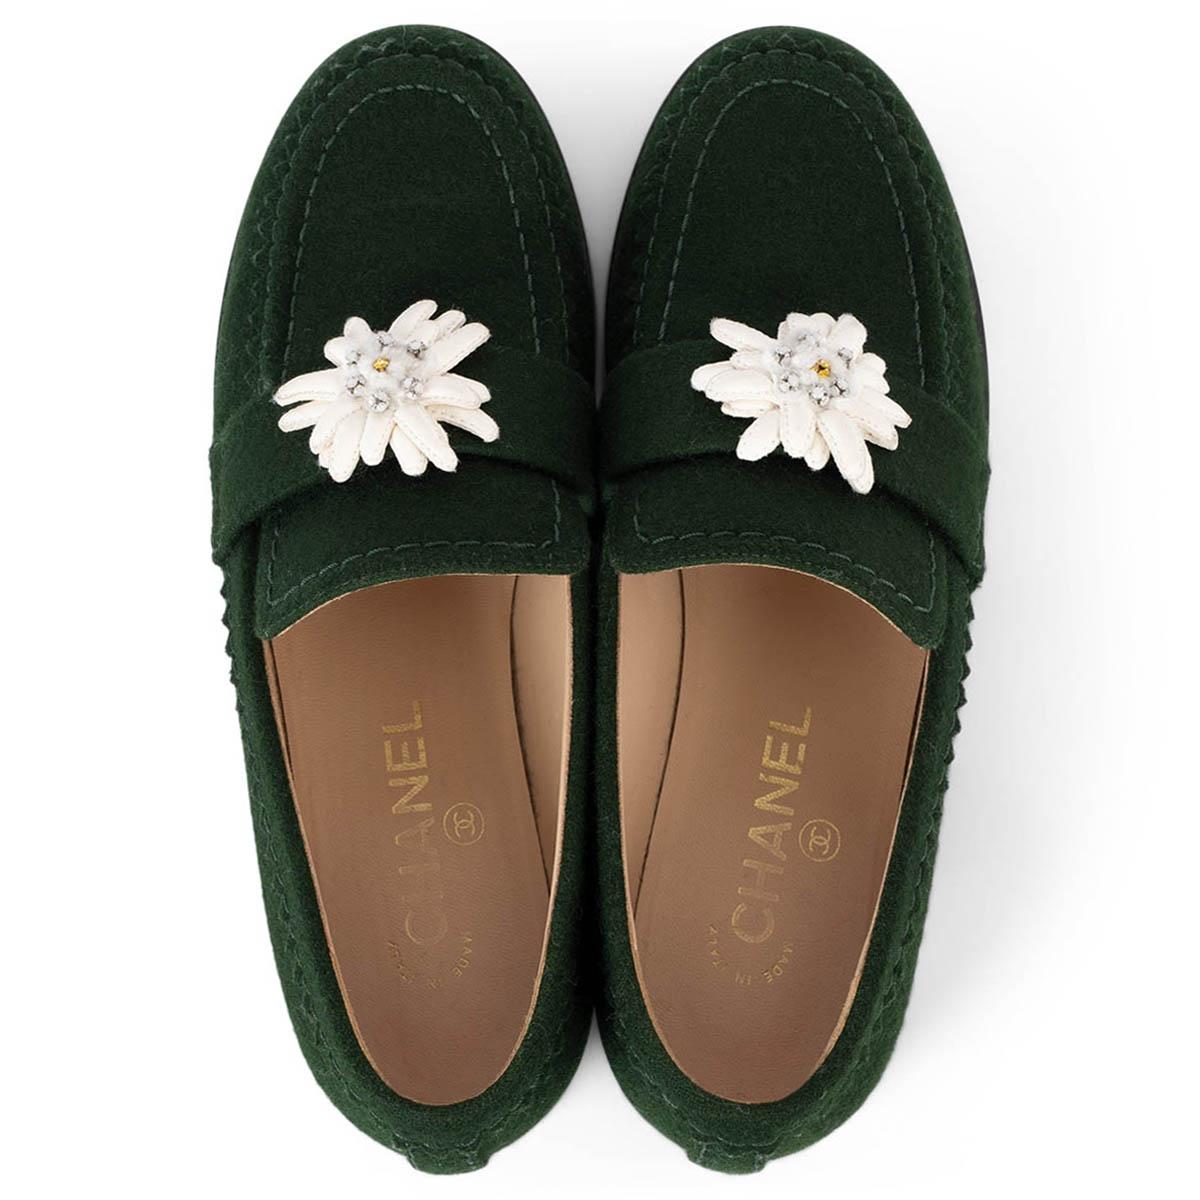 CHANEL dark green felt 2015 15A SALZBURG Loafers Flats Shoes 39 fit 38.5 2